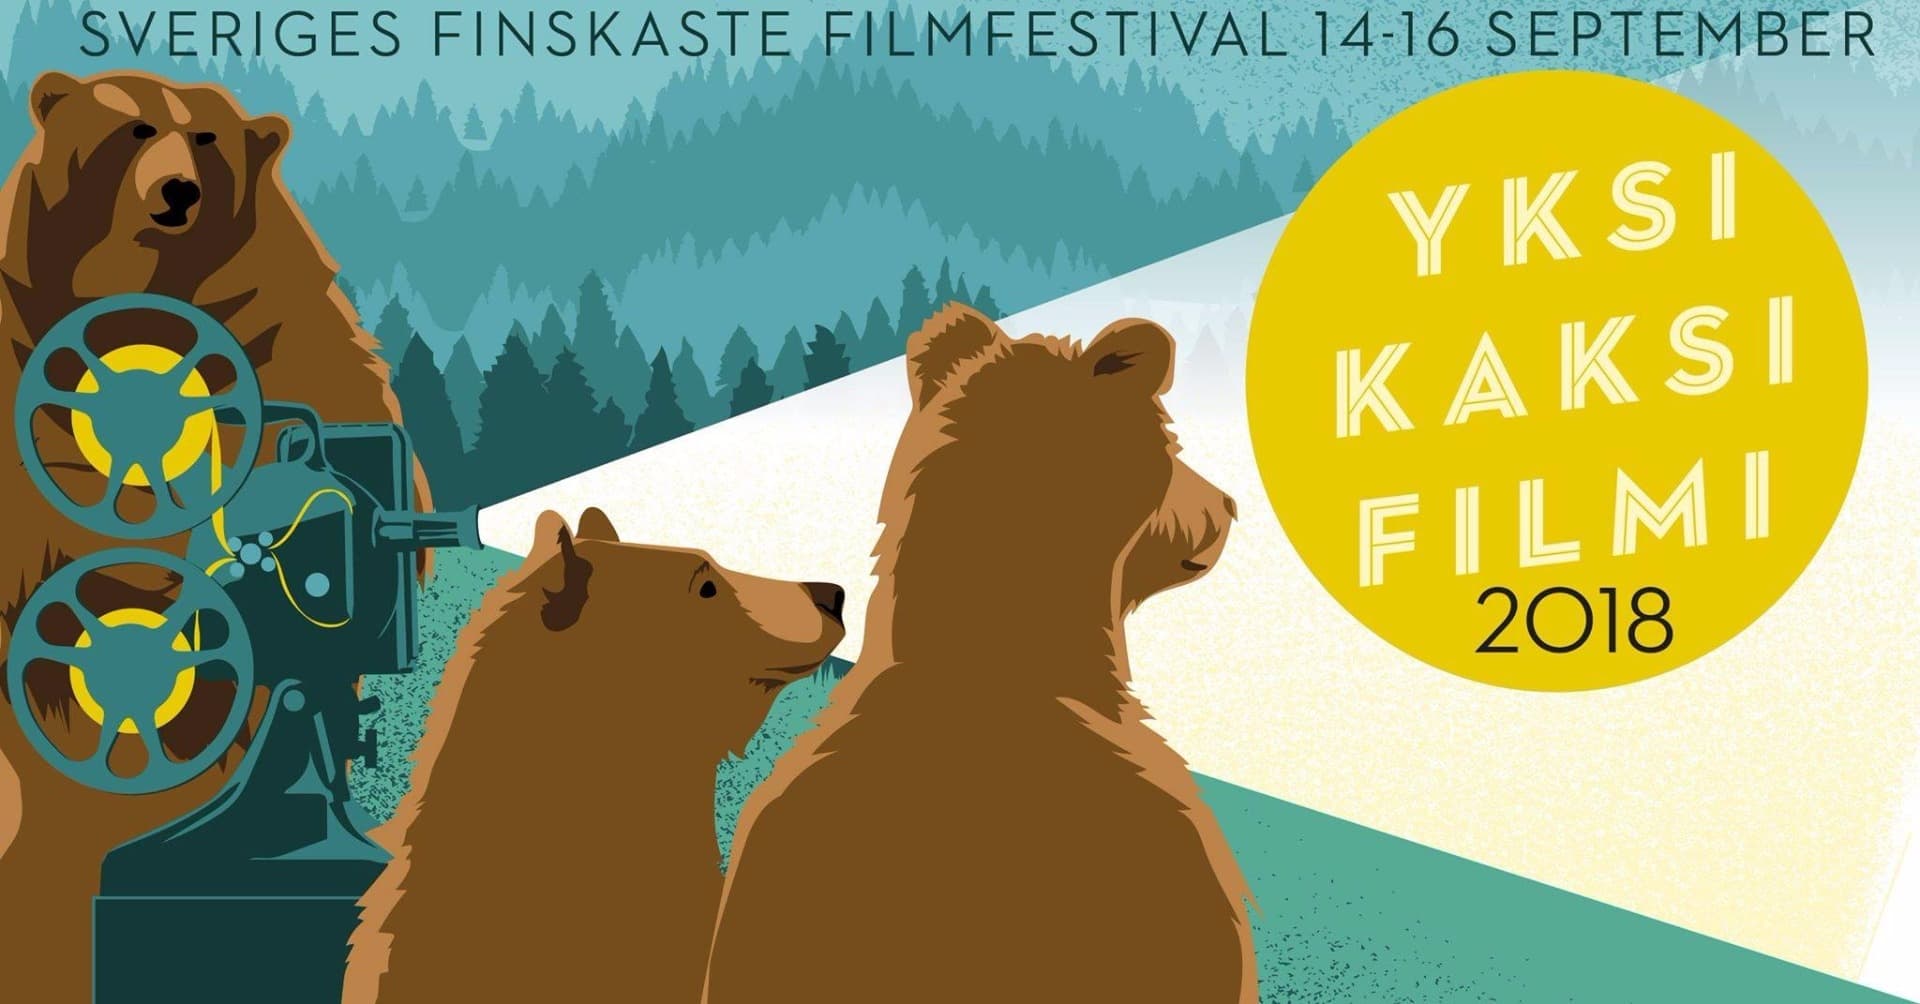 Sveriges finskaste filmfestival: YksiKaksiFilmi